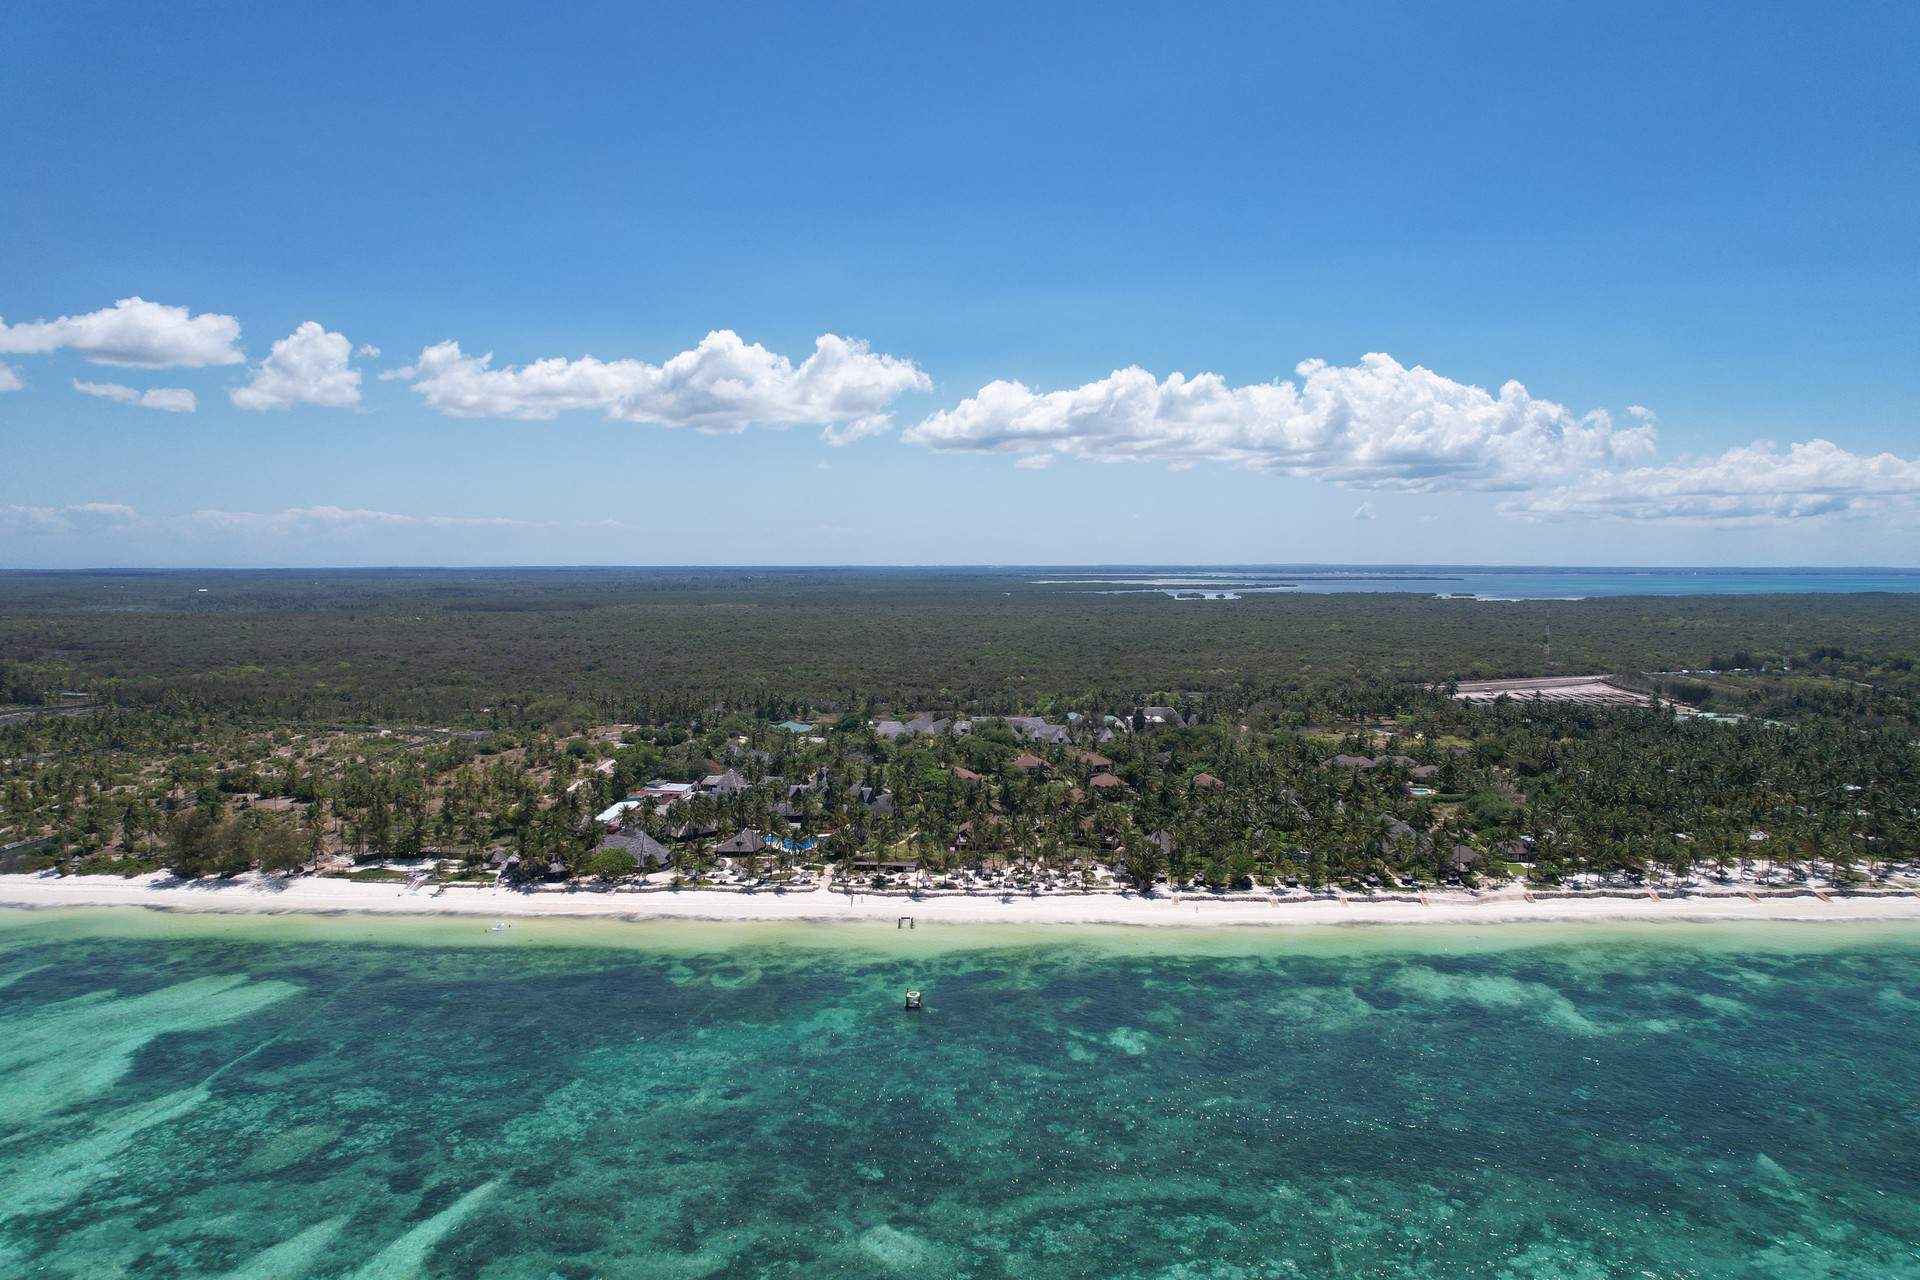 Aerial view of beach in Zanzibar, Tanzania. Arriving into Zanzibar